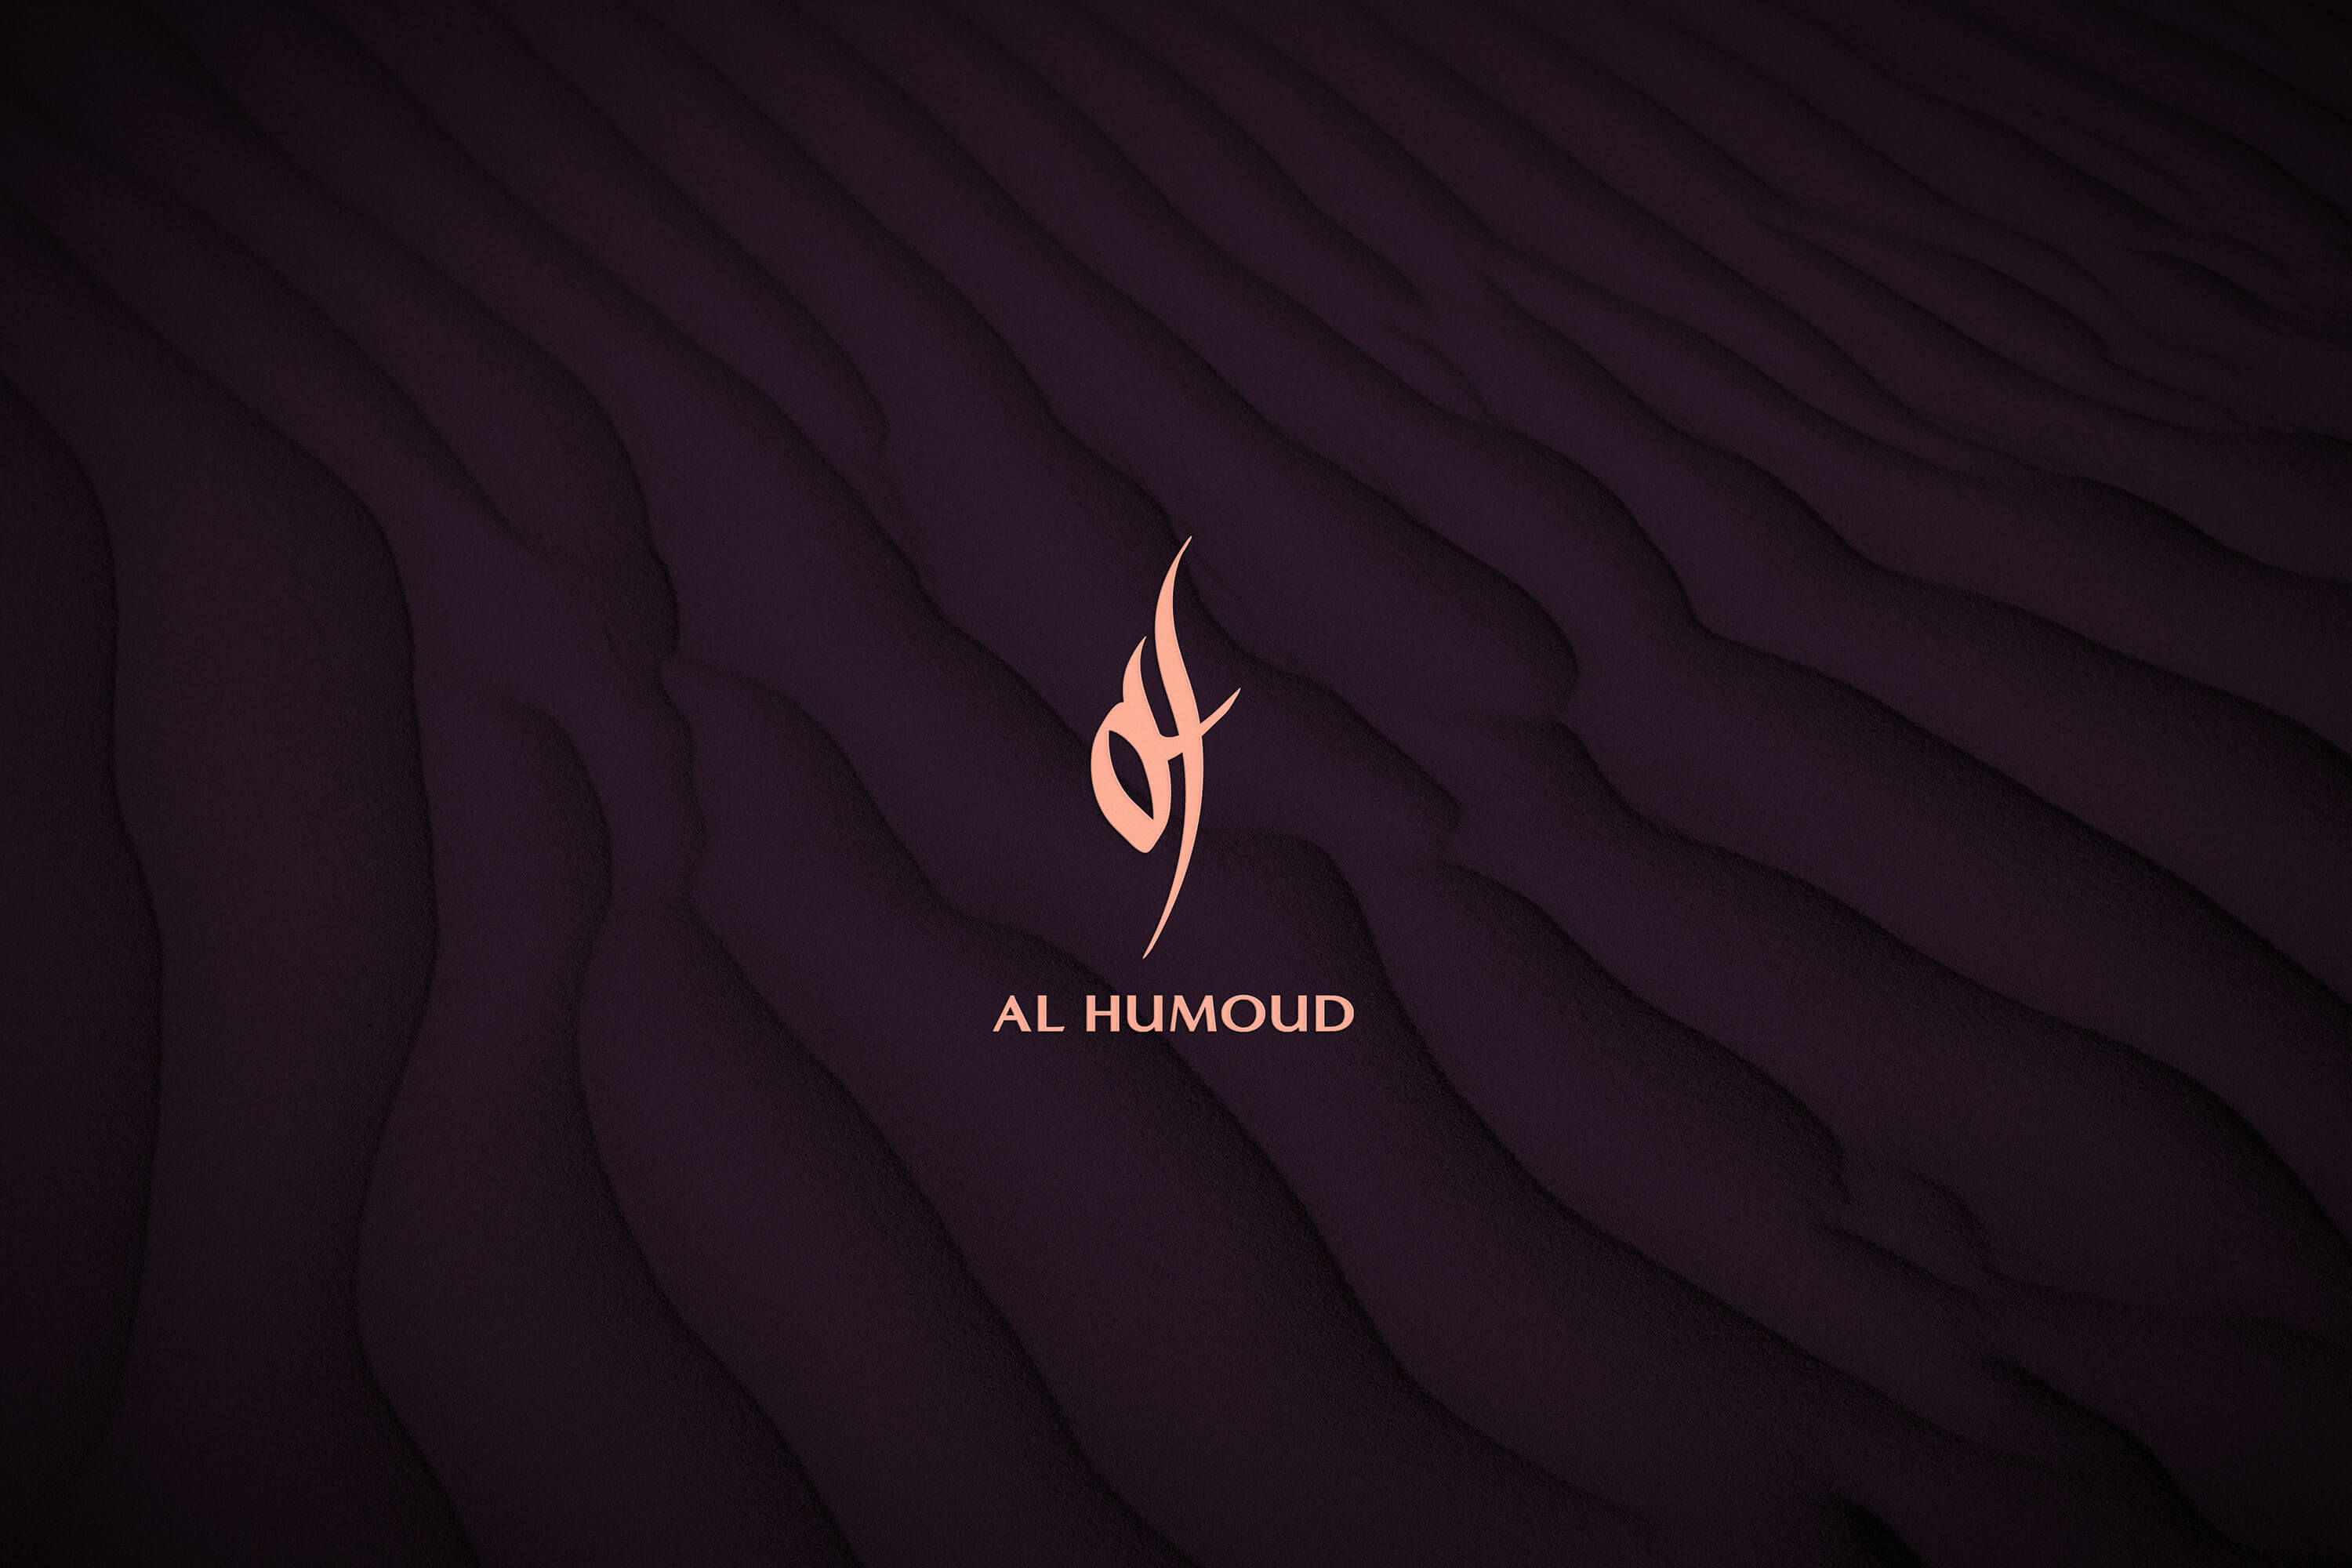 Al Humoud Premium Chocolate Brand Designed by Slava Trubnikov